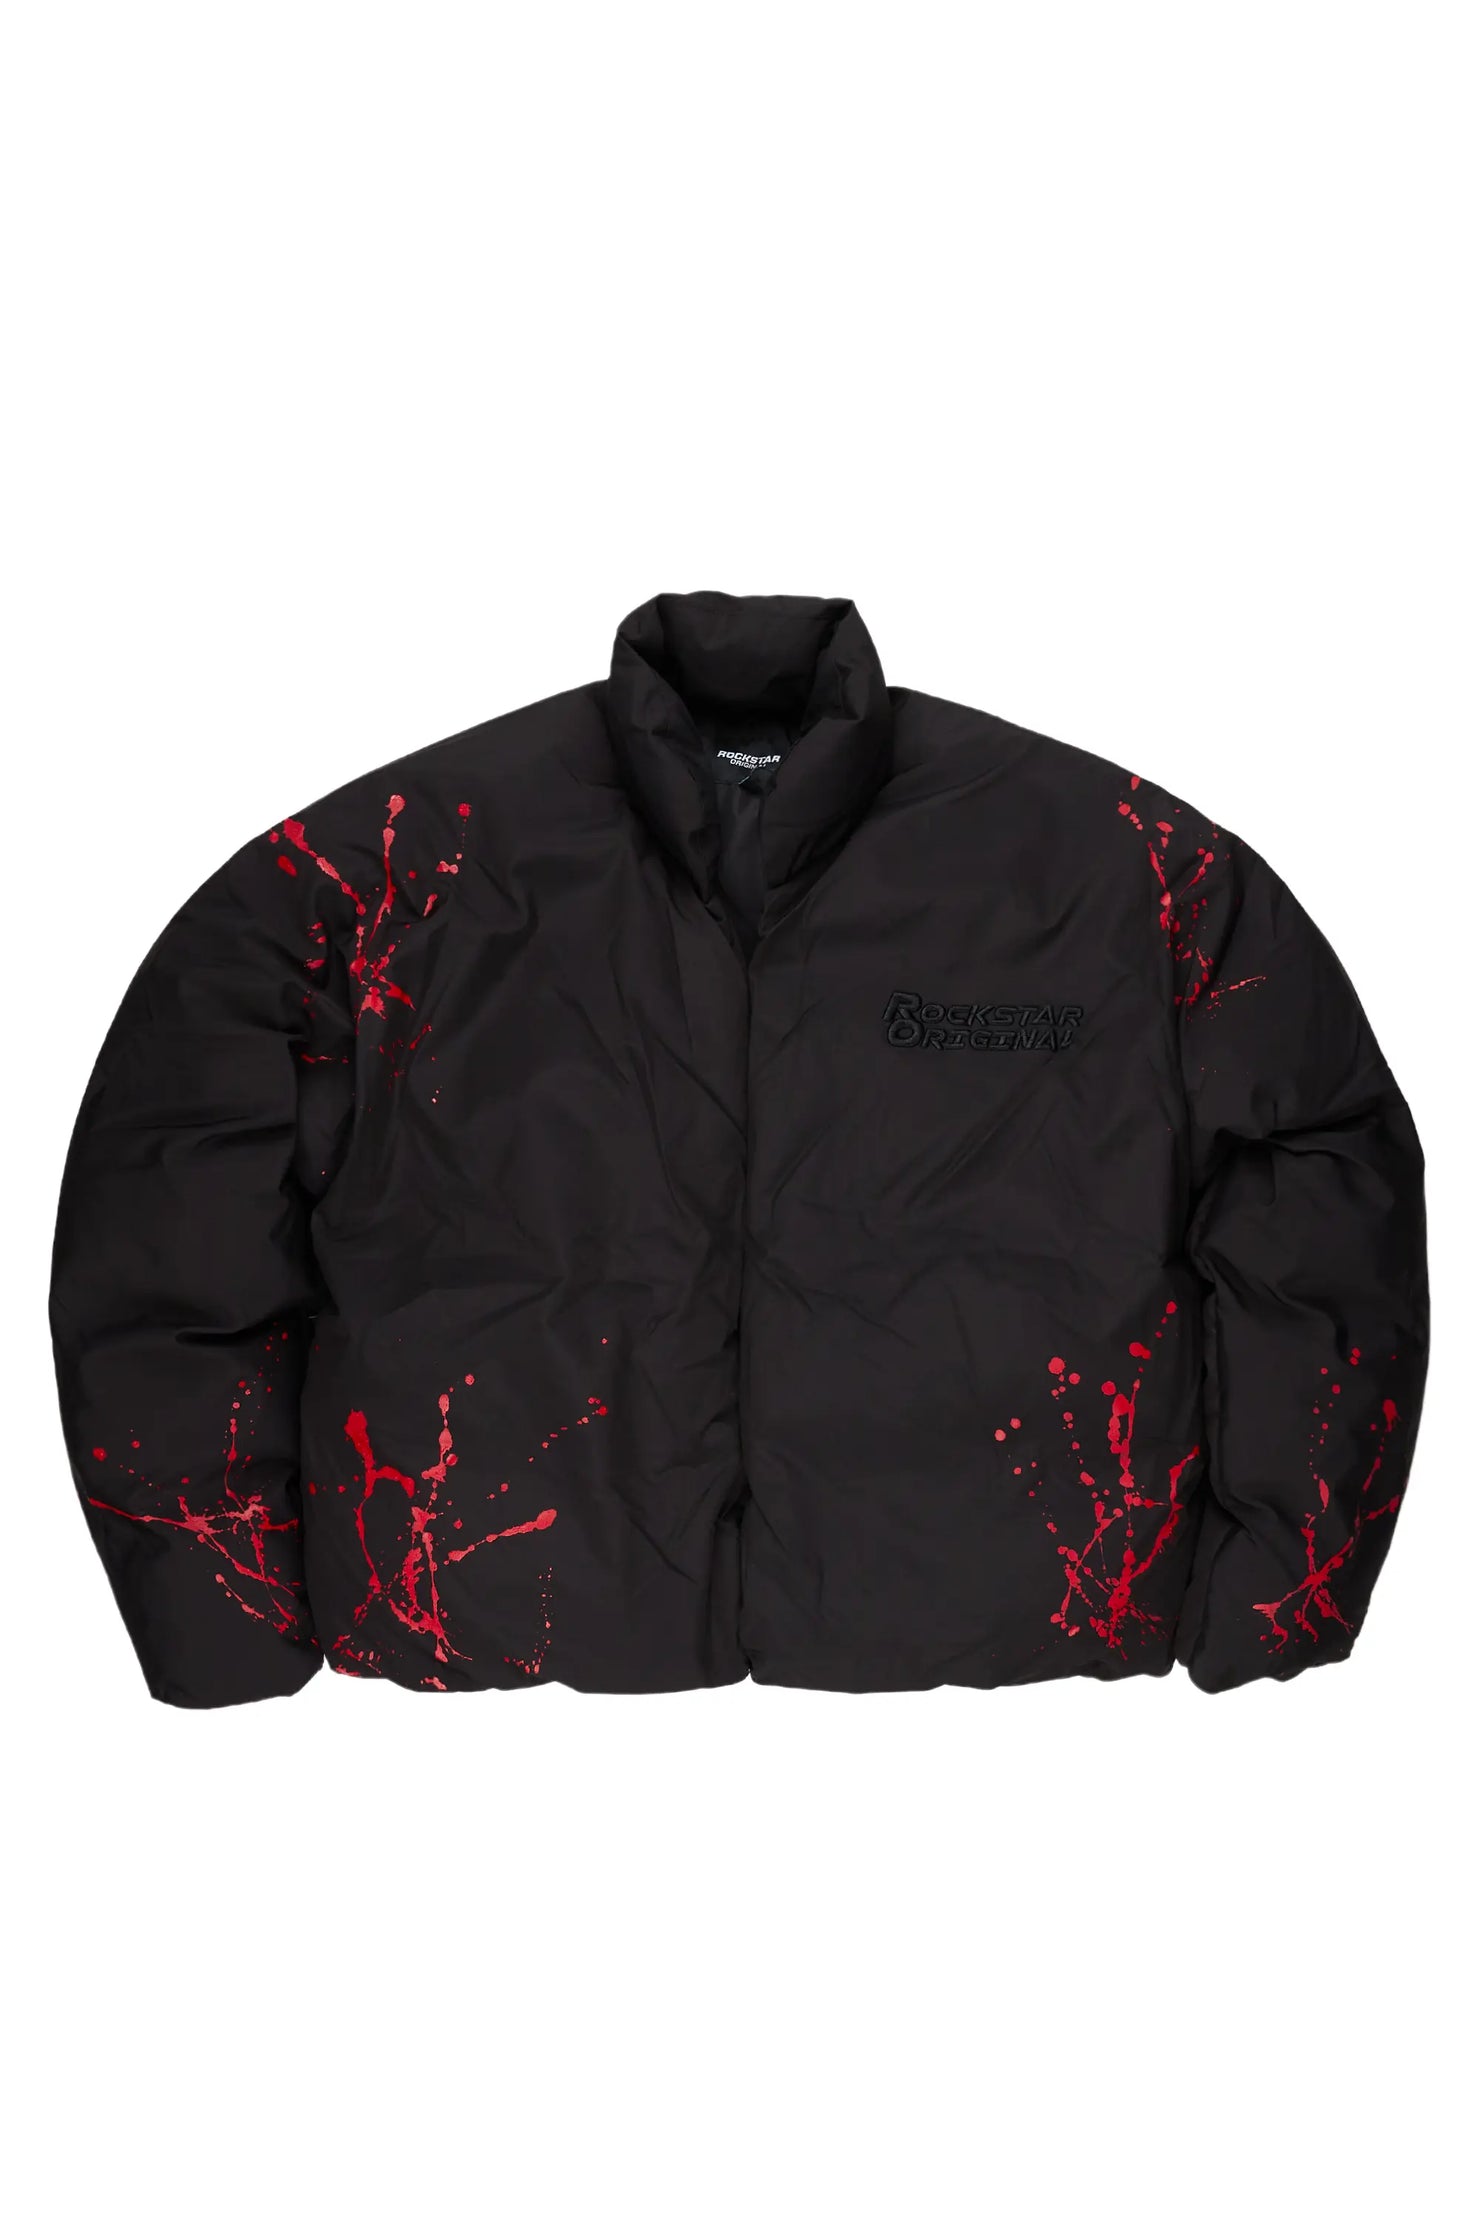 Rabbie Black/Red Puffer Jacket